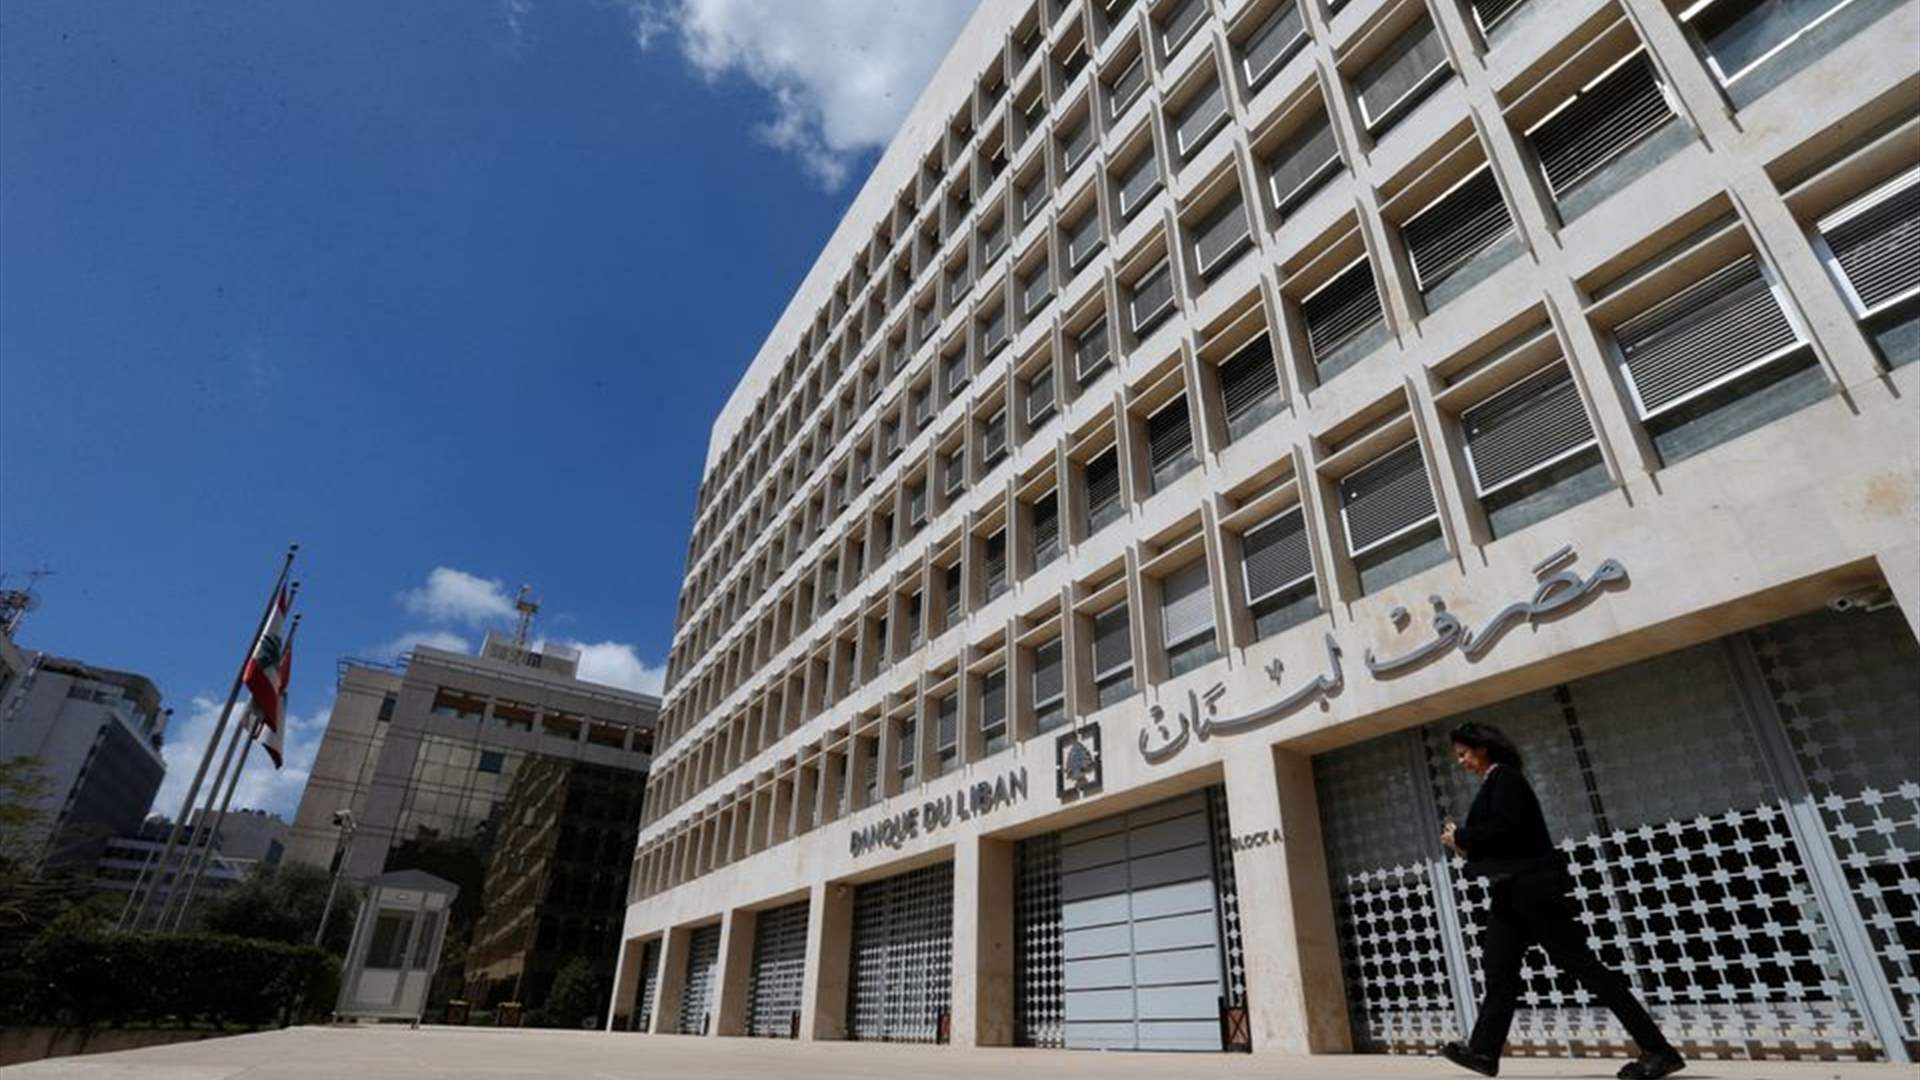 Latest on European money laundering investigation in Lebanon